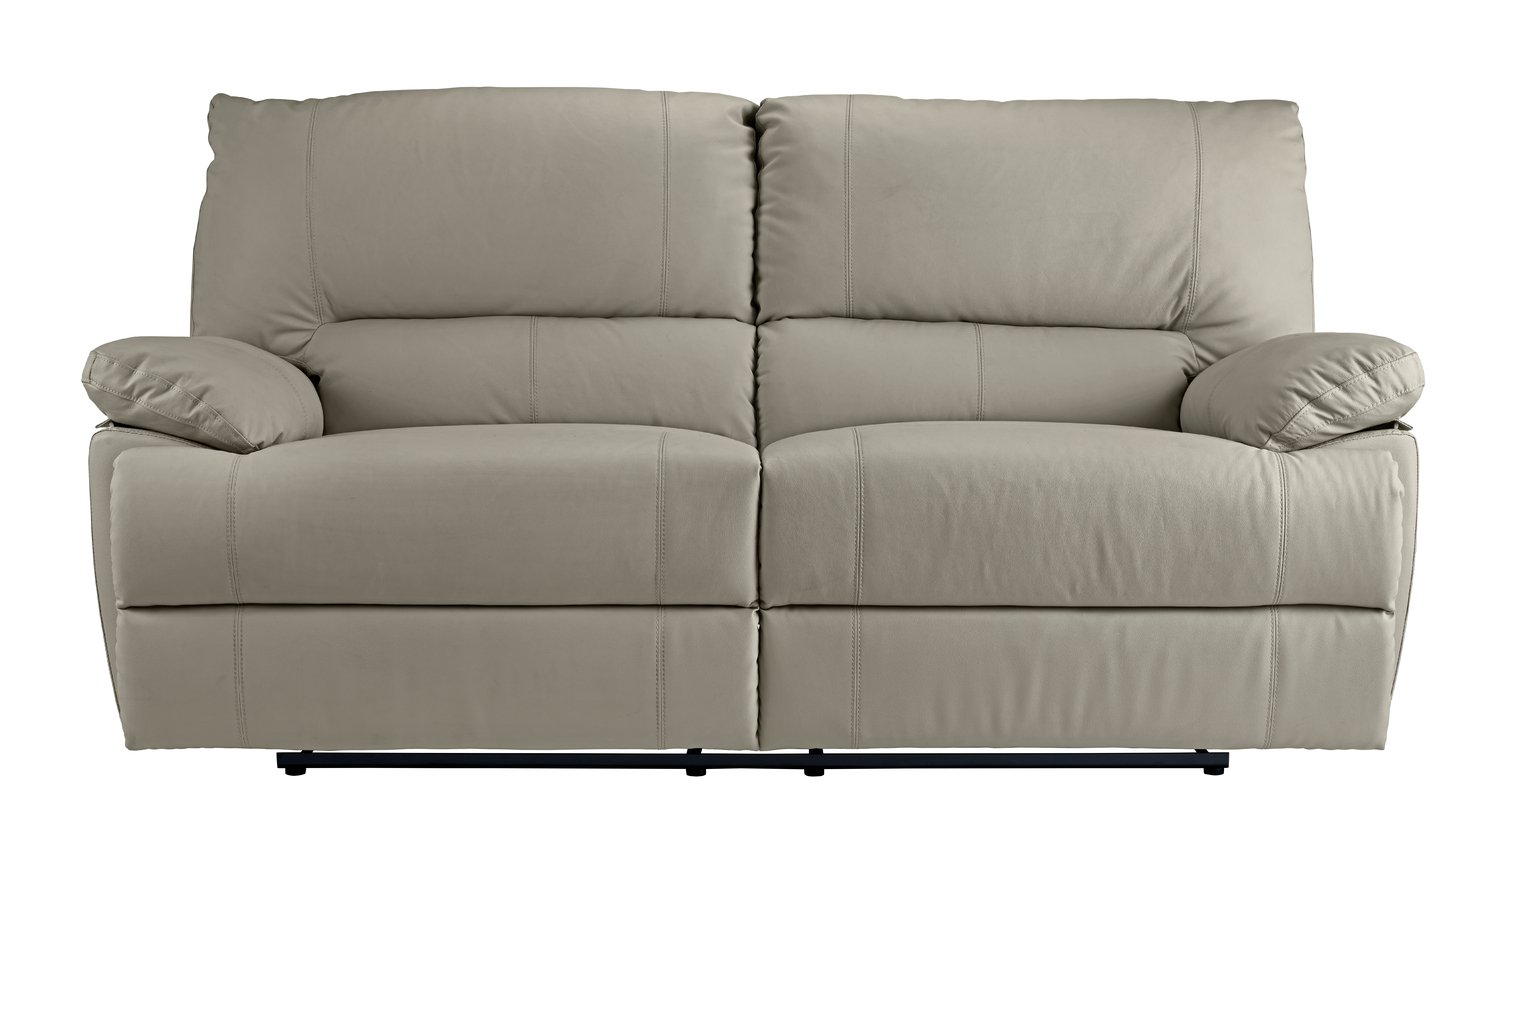 Argos Home Devlin 3 Seater Leather Mix Recliner Sofa - Grey